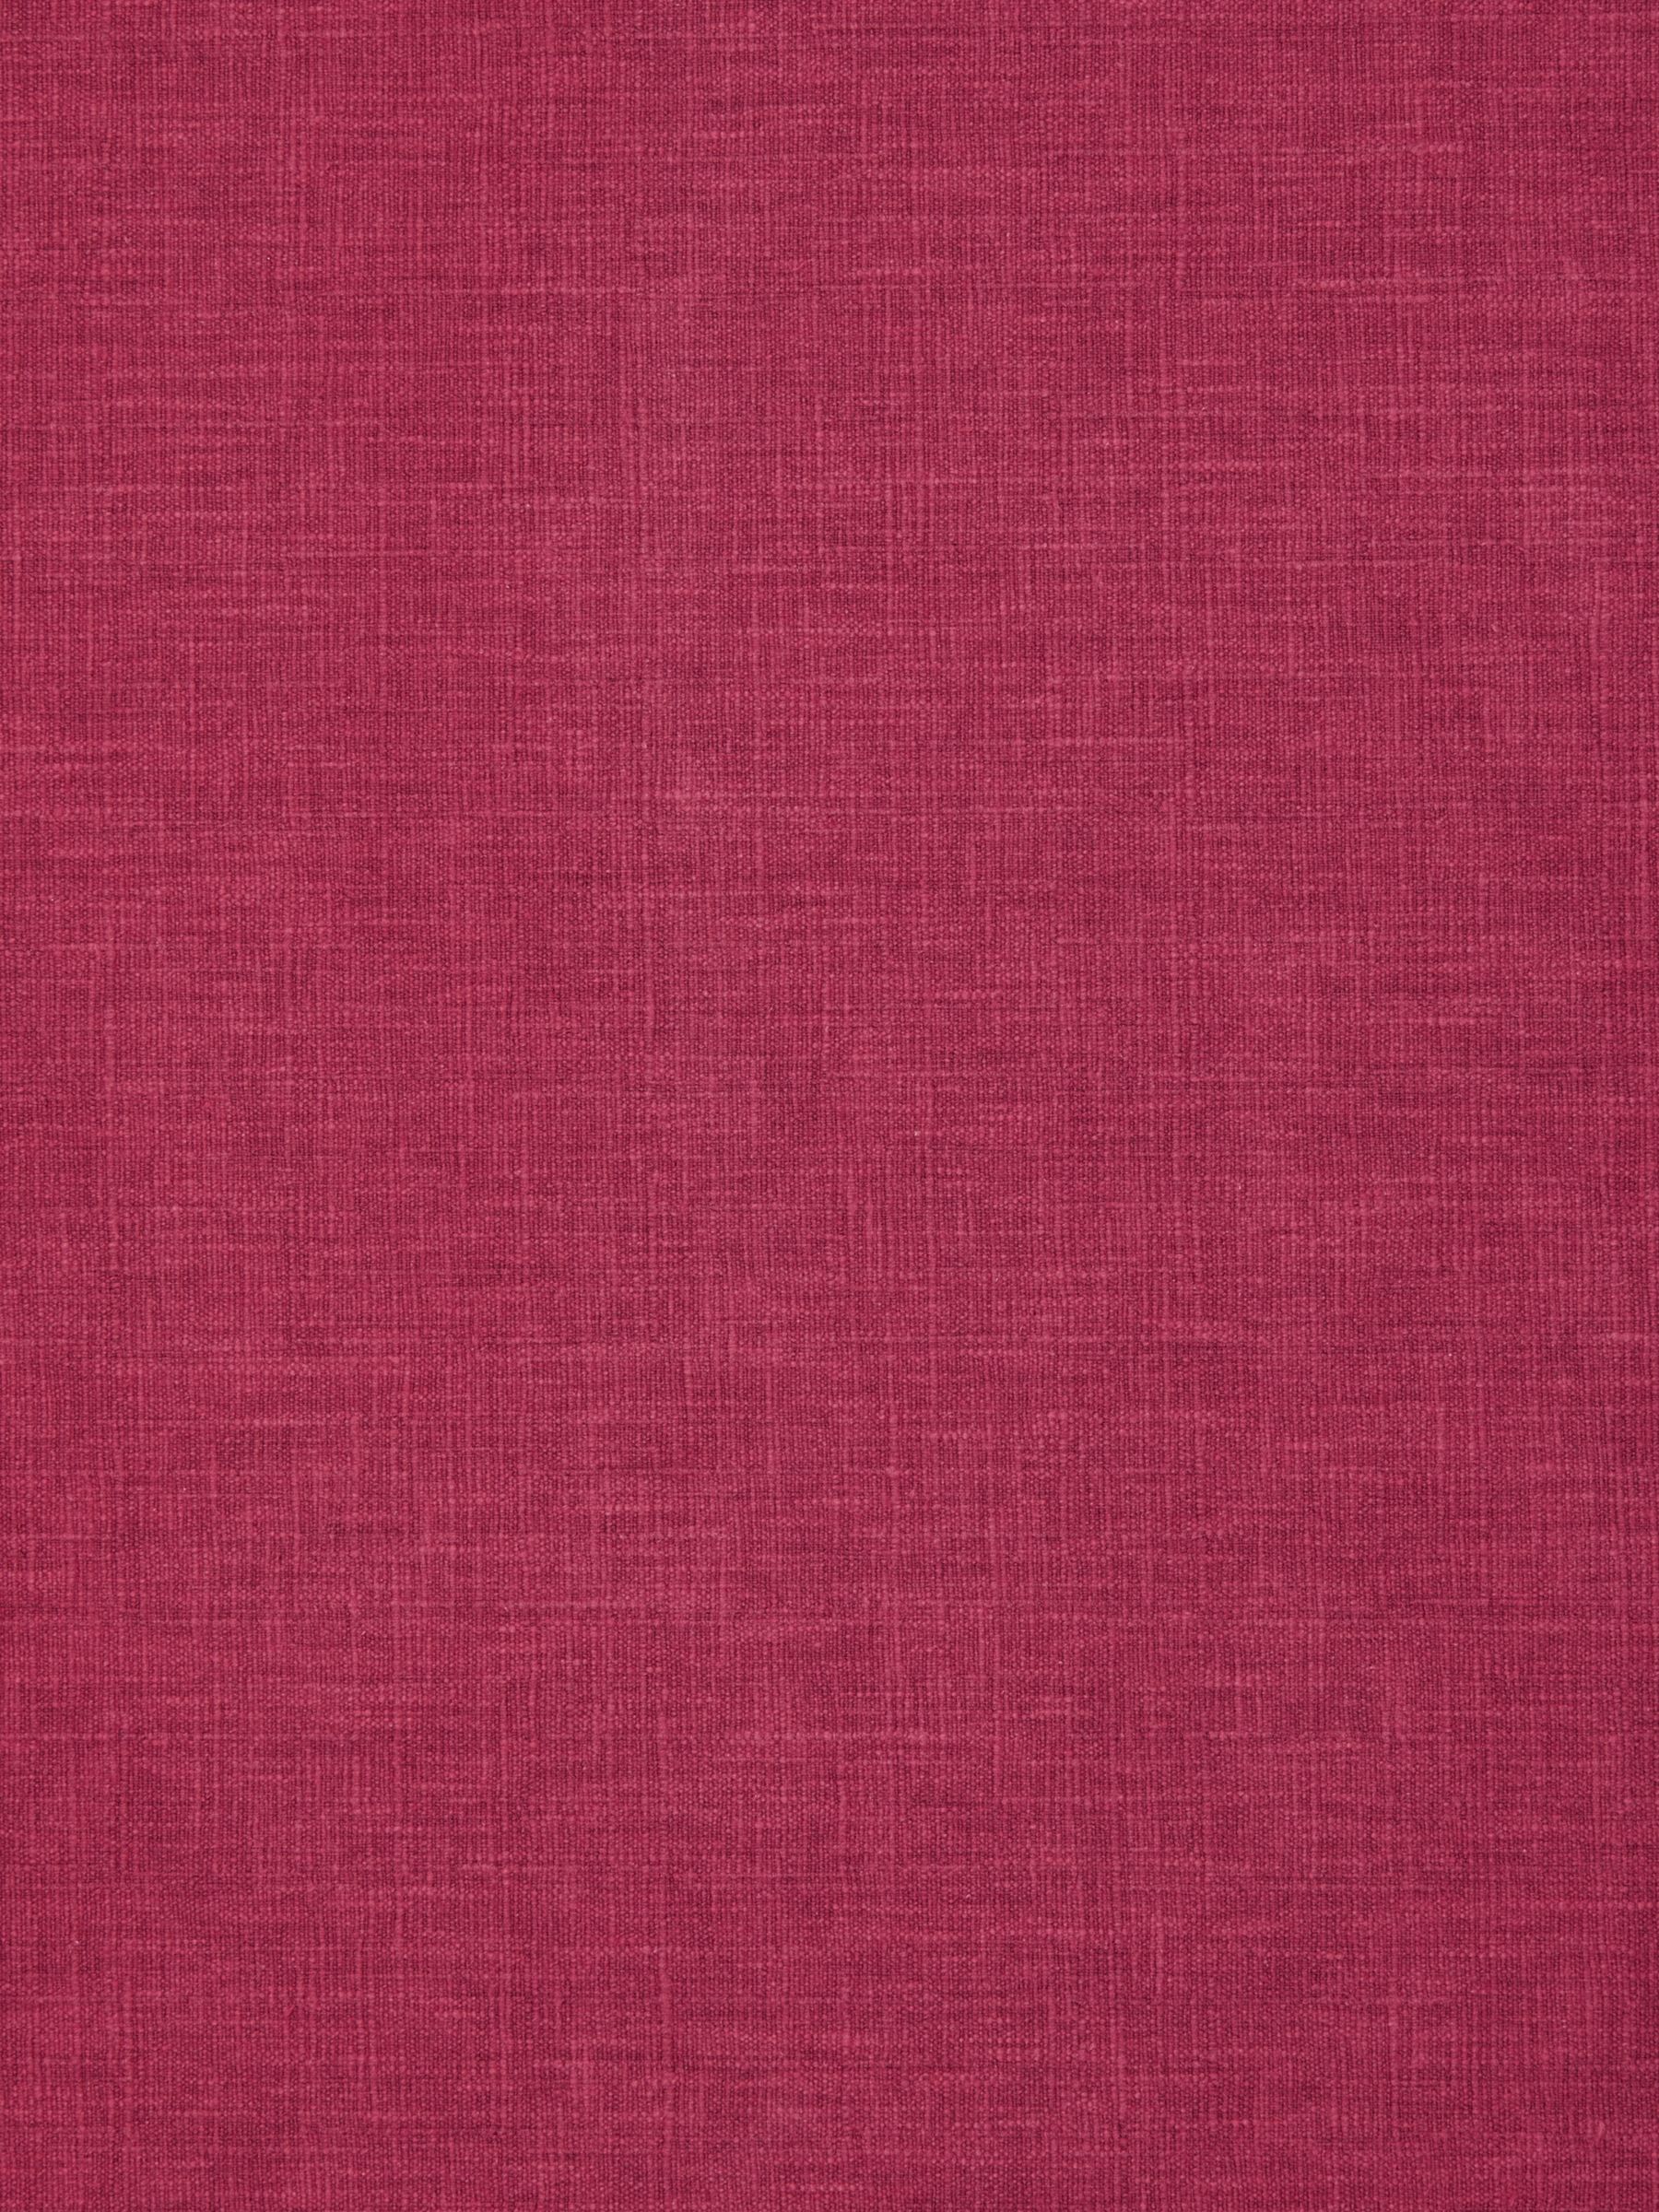 John Lewis Cotton Blend Furnishing Fabric, Raspberry